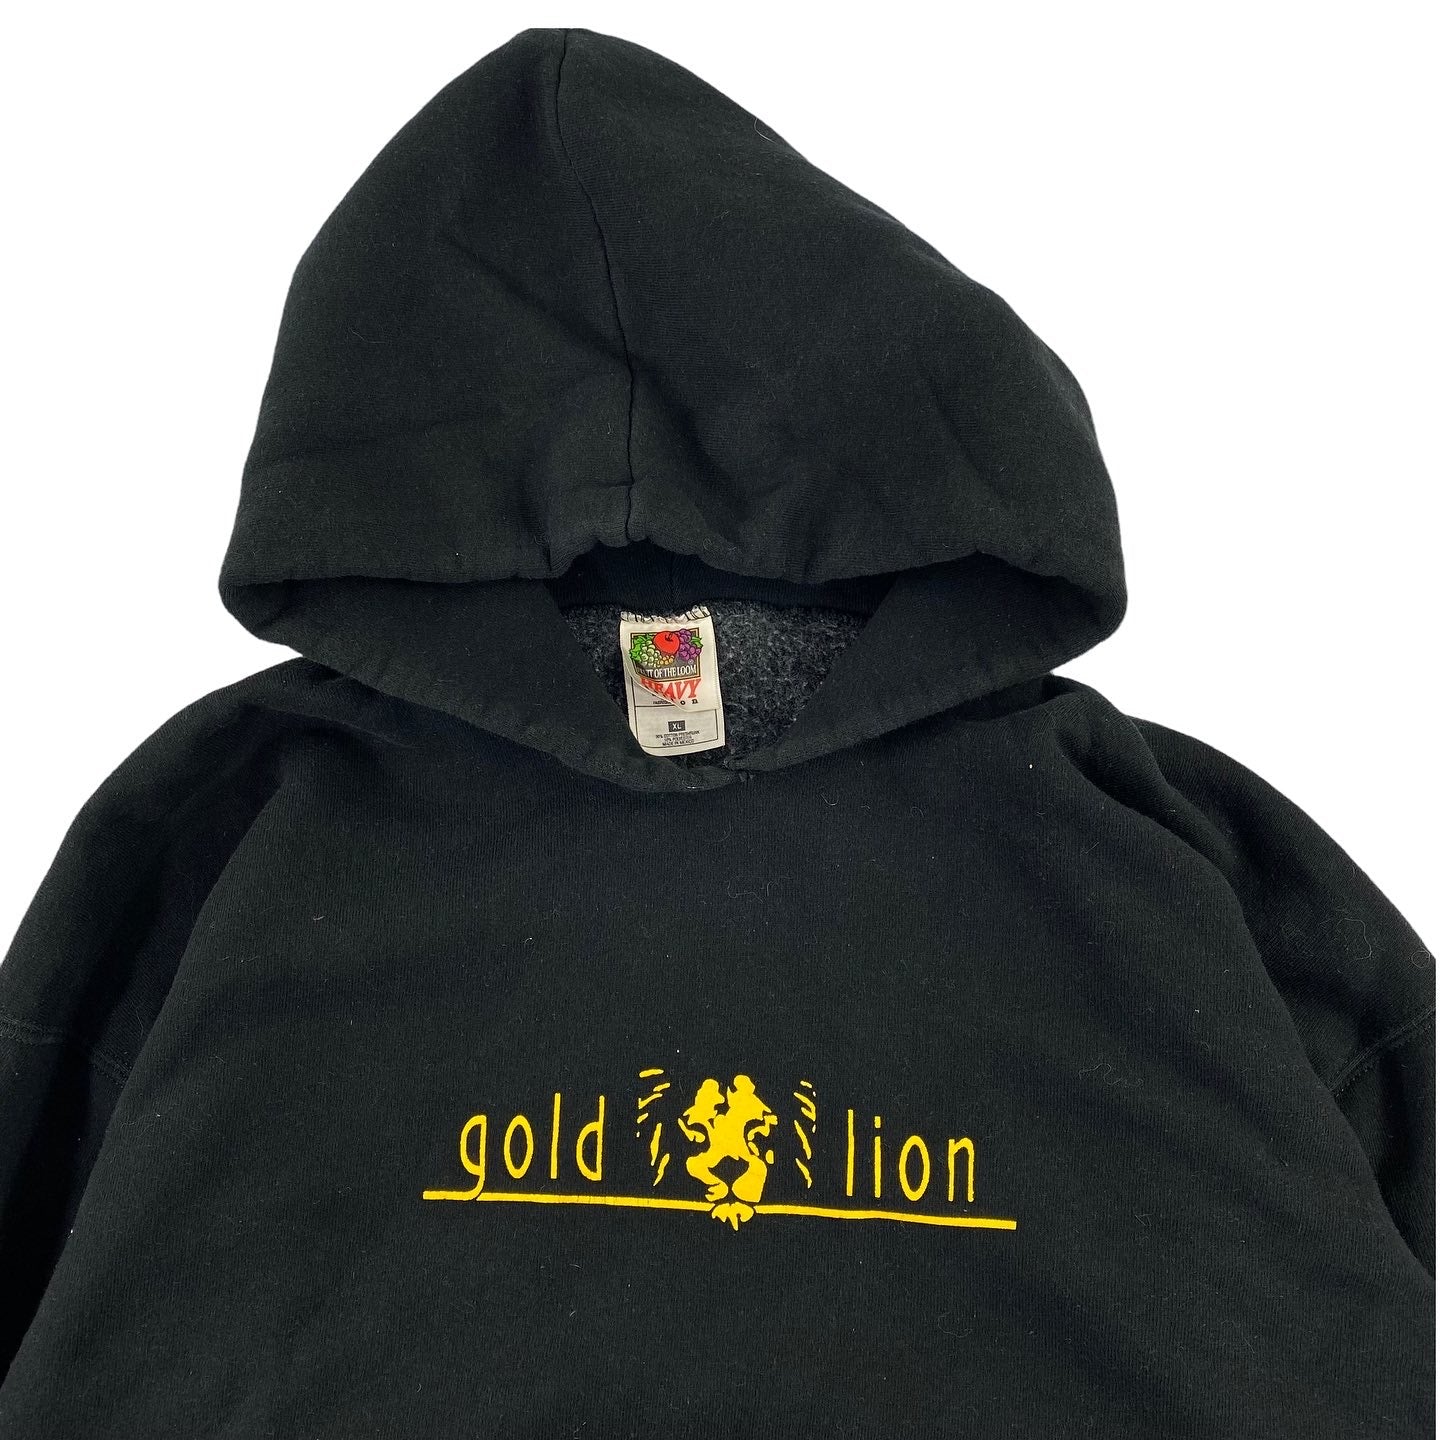 Gold lion hooded sweatshirt. XL